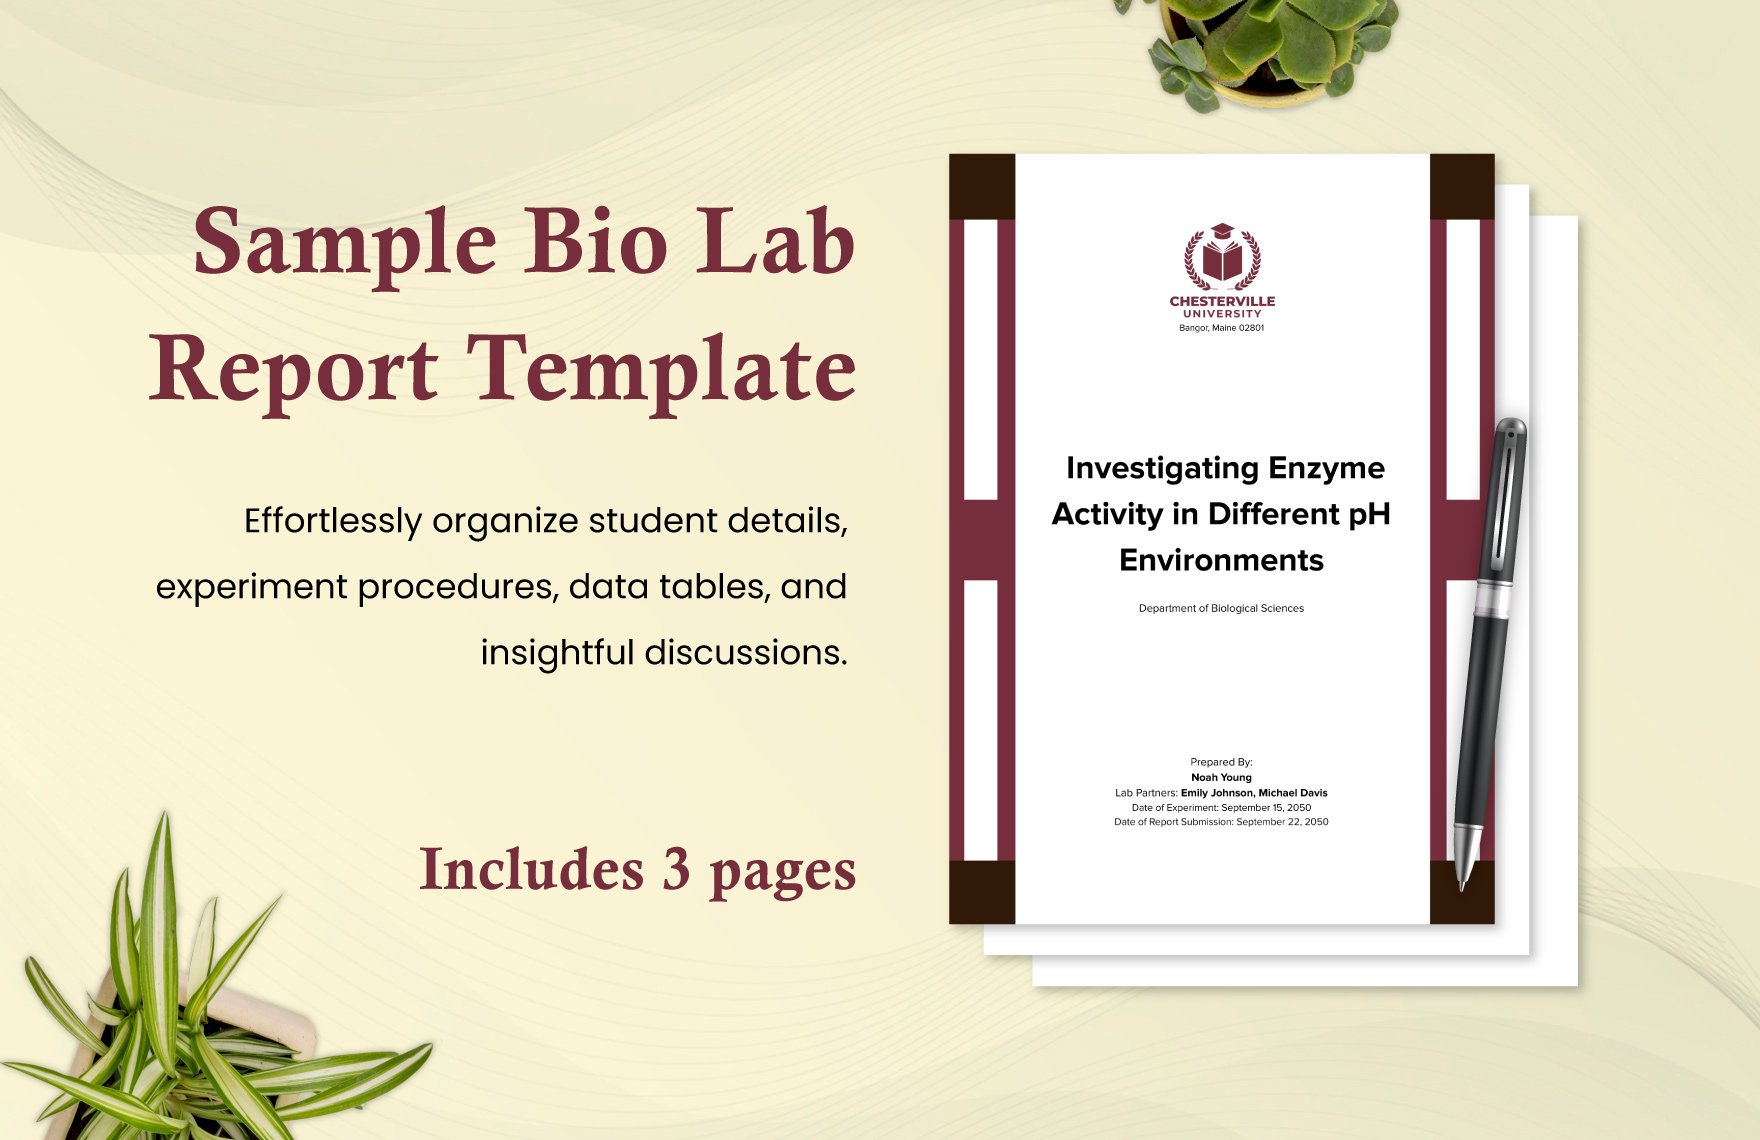 Sample Bio Lab Report Template